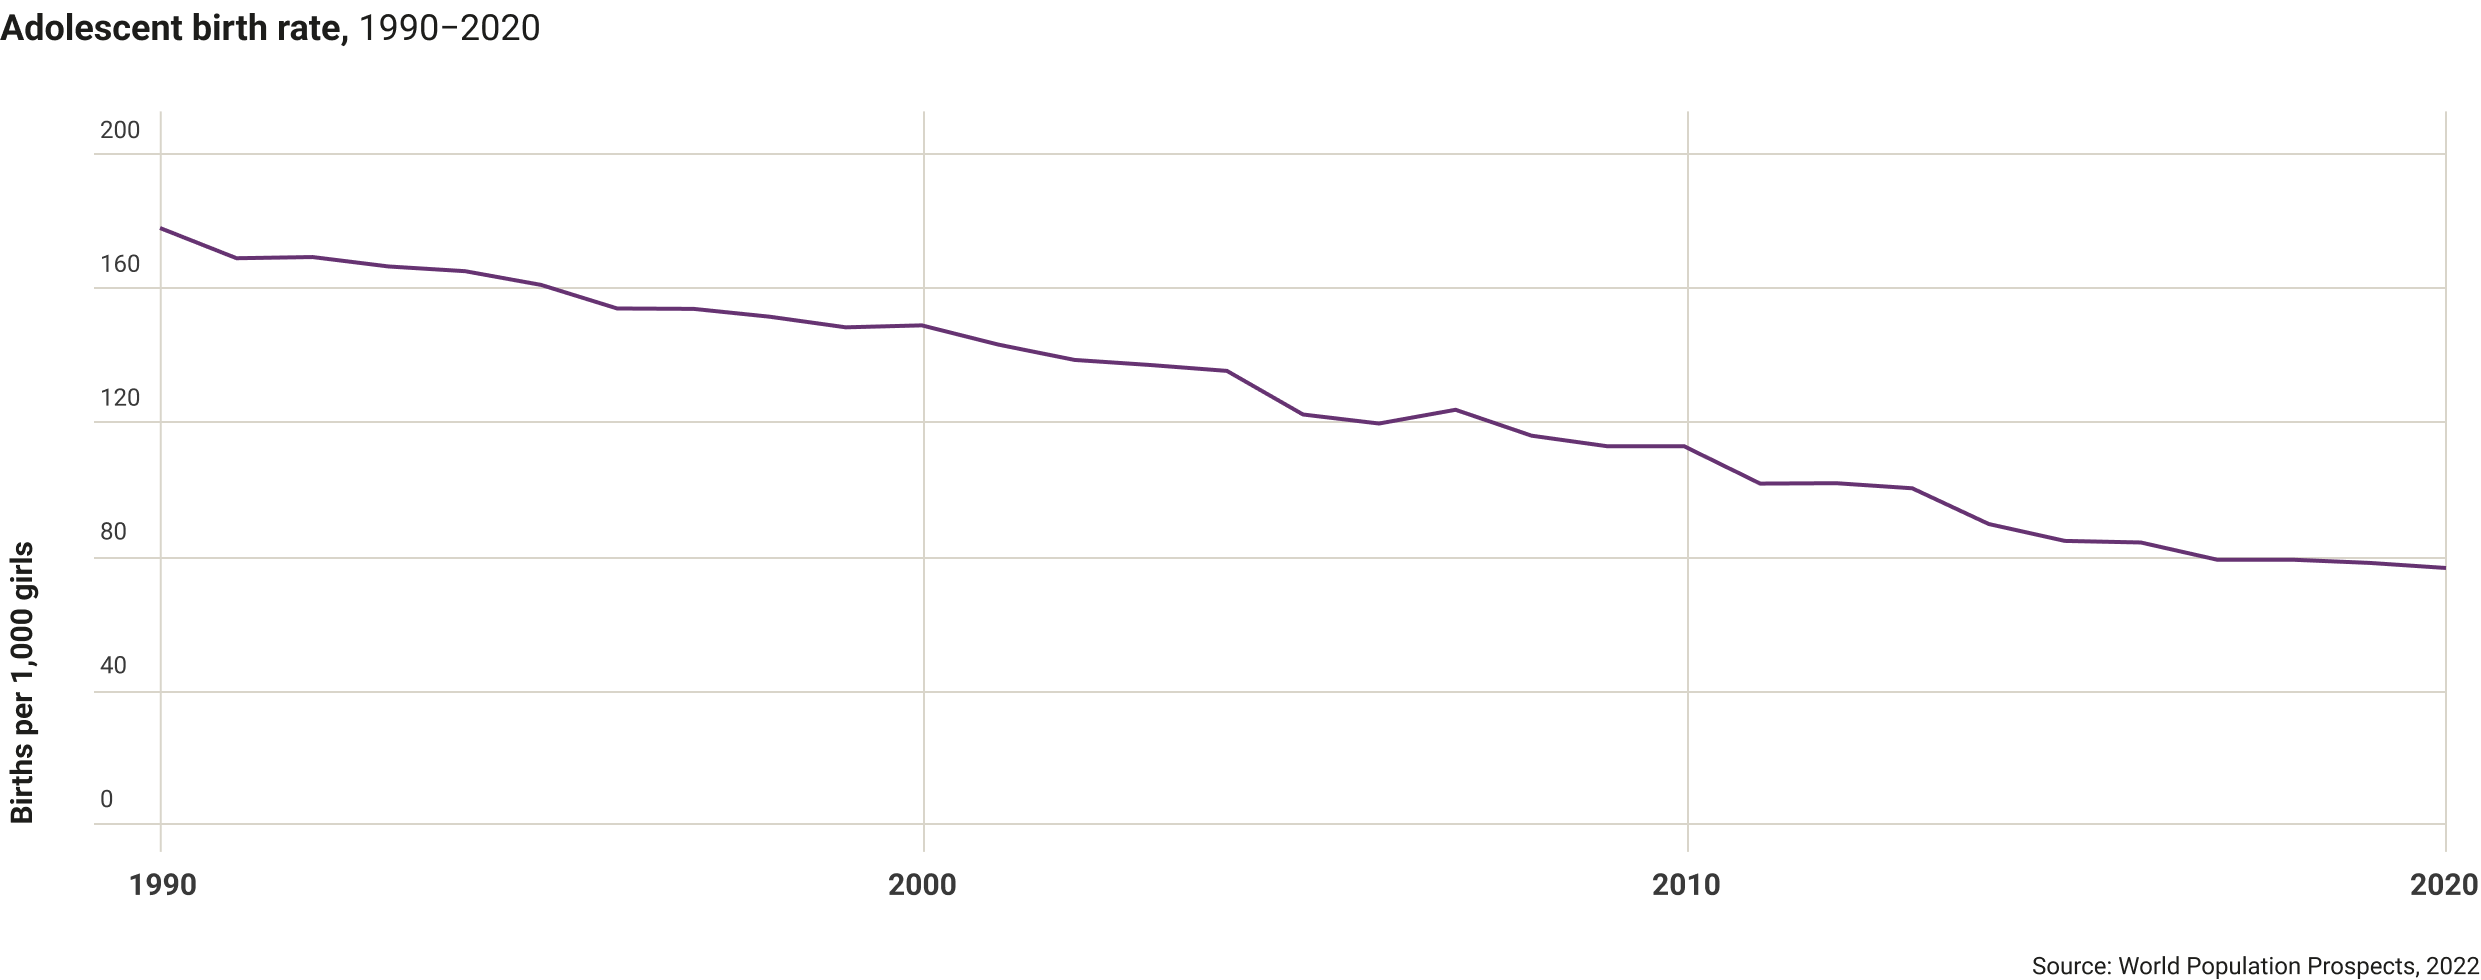 bangladesh-adolescence-birth-rate-1990-2020